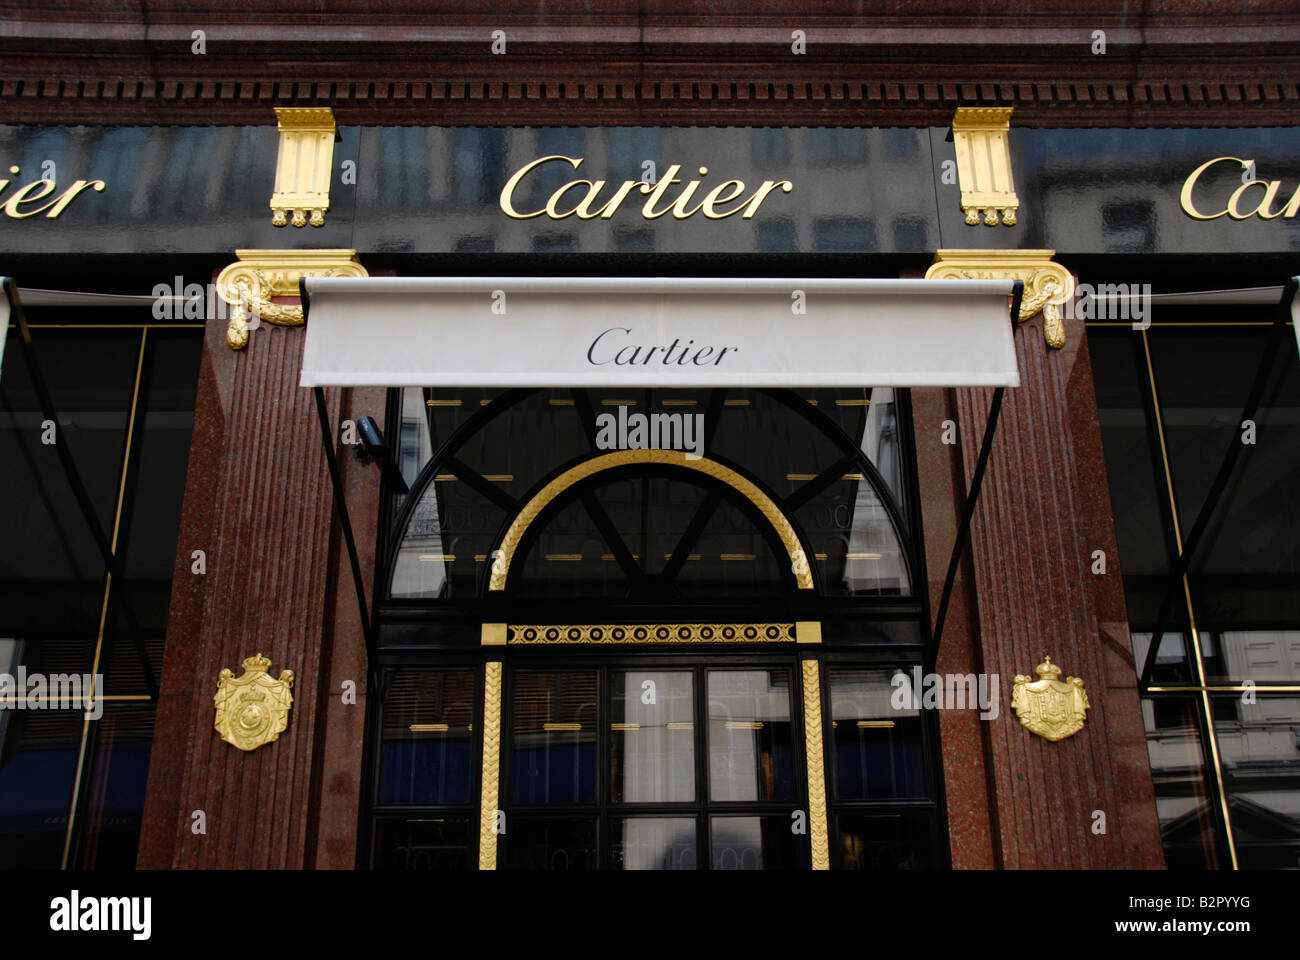 cartier shops belgium